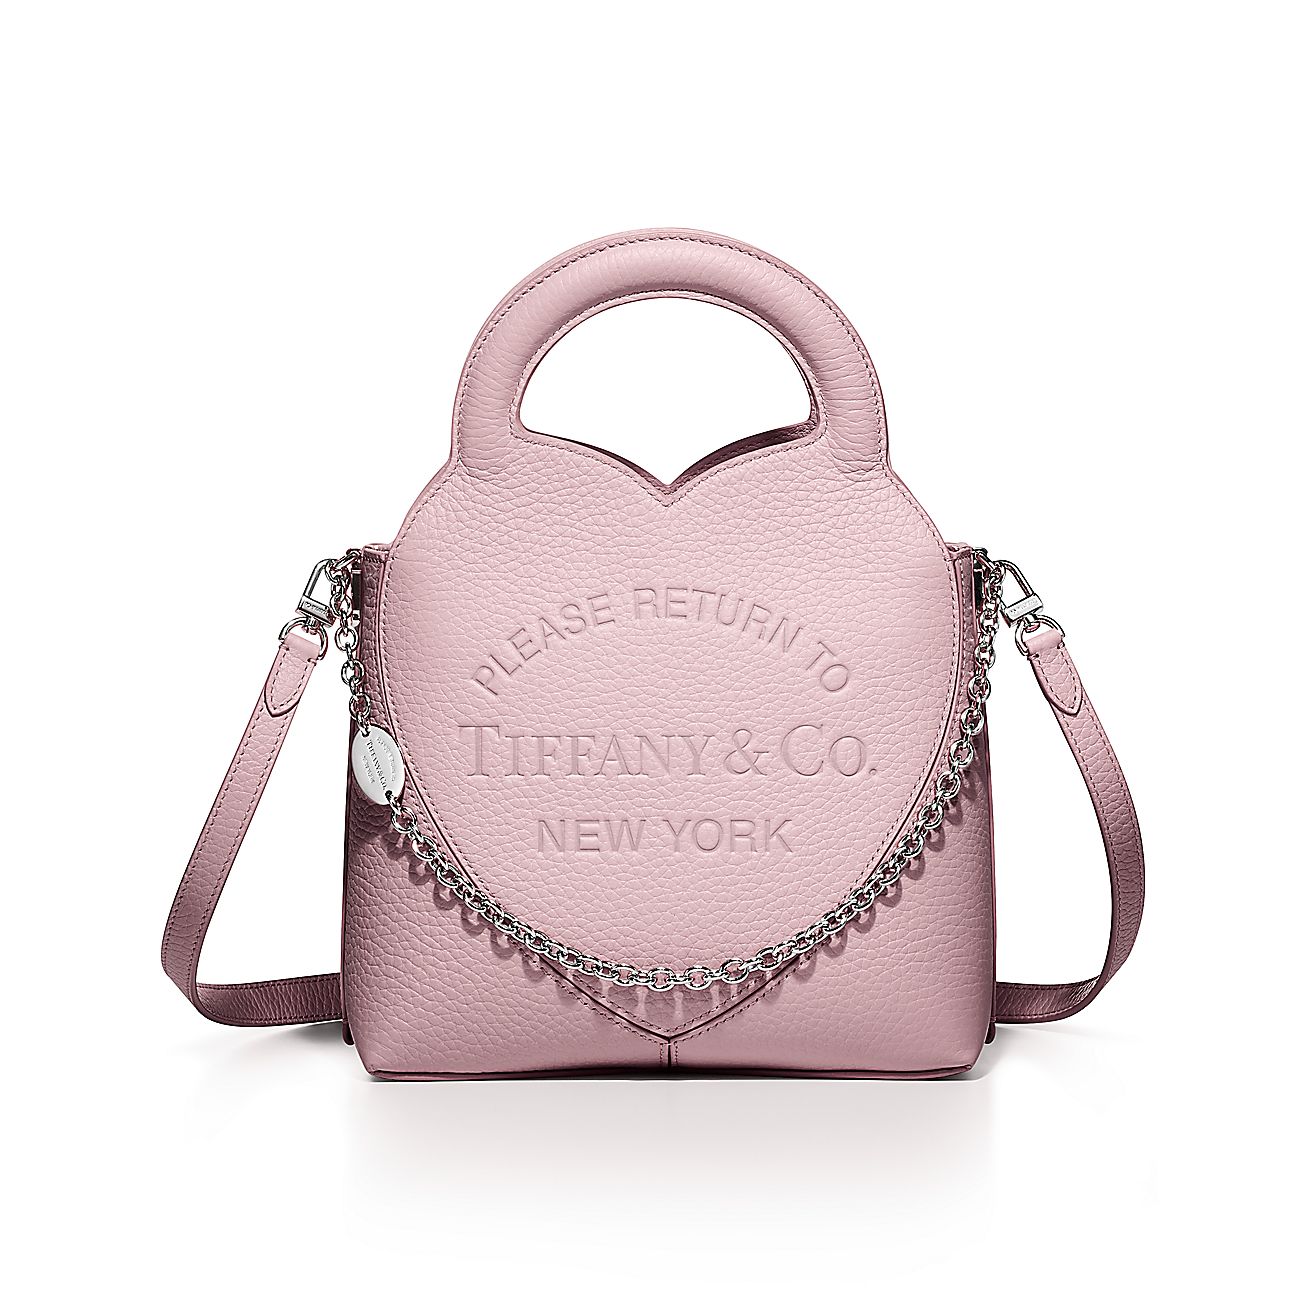 Tiffany & Co NEW Blue Shopping Bag Gift Bag 10 X 8 x 4 FREE Shipping